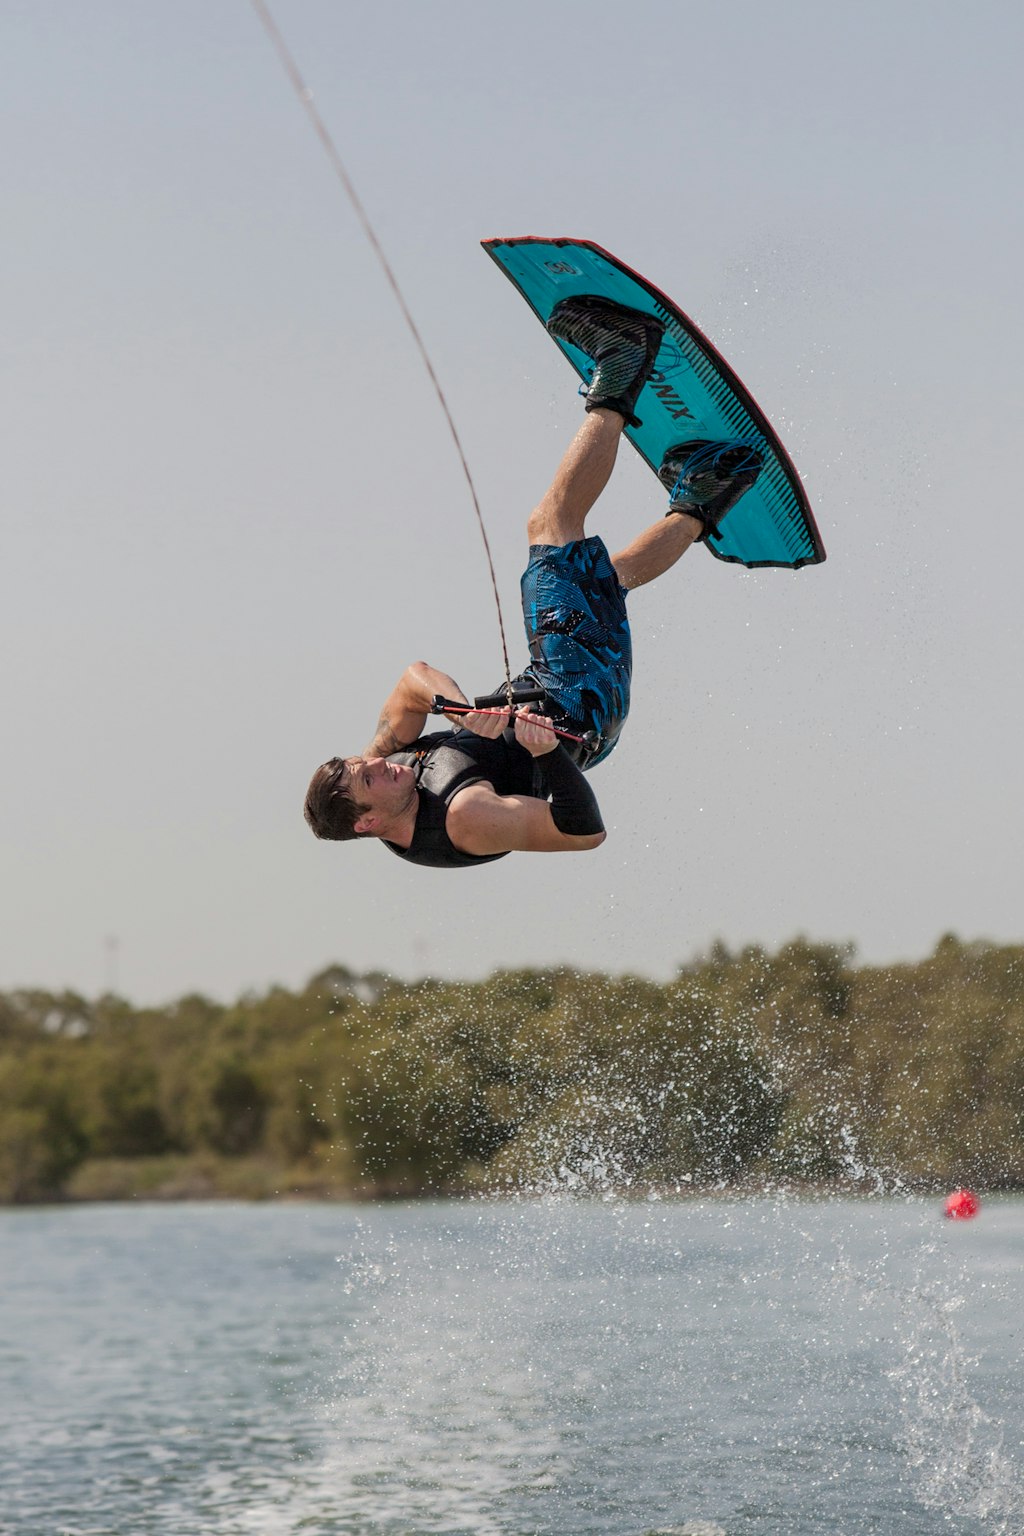 Matt McCreadie, TeamGB 🇬🇧, at the 2019 Worlds in Abu Dhabi